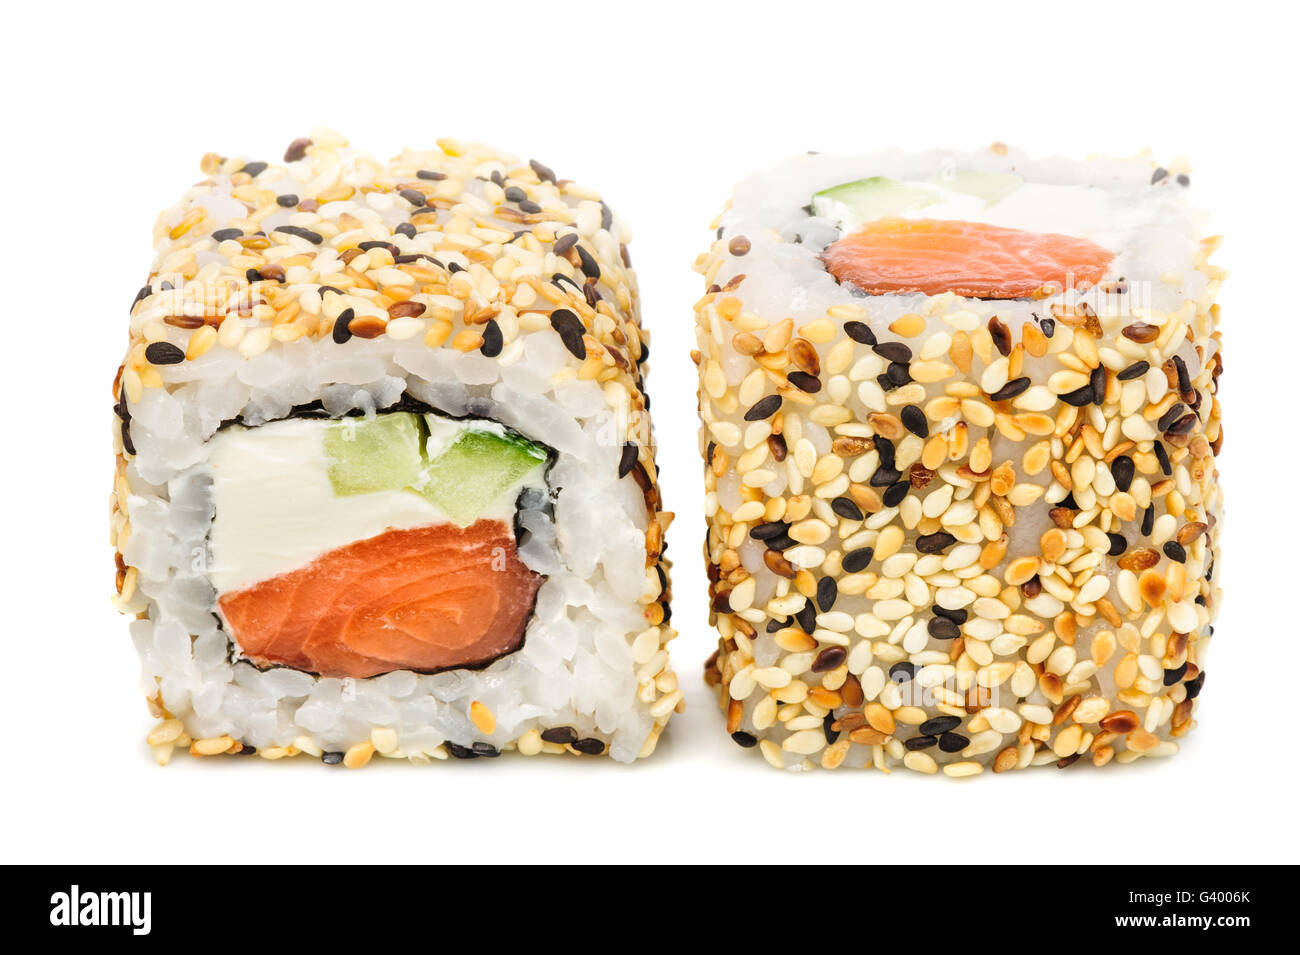 https://c8.alamy.com/comp/G4006K/uramaki-maki-sushi-two-rolls-isolated-on-white-G4006K.jpg